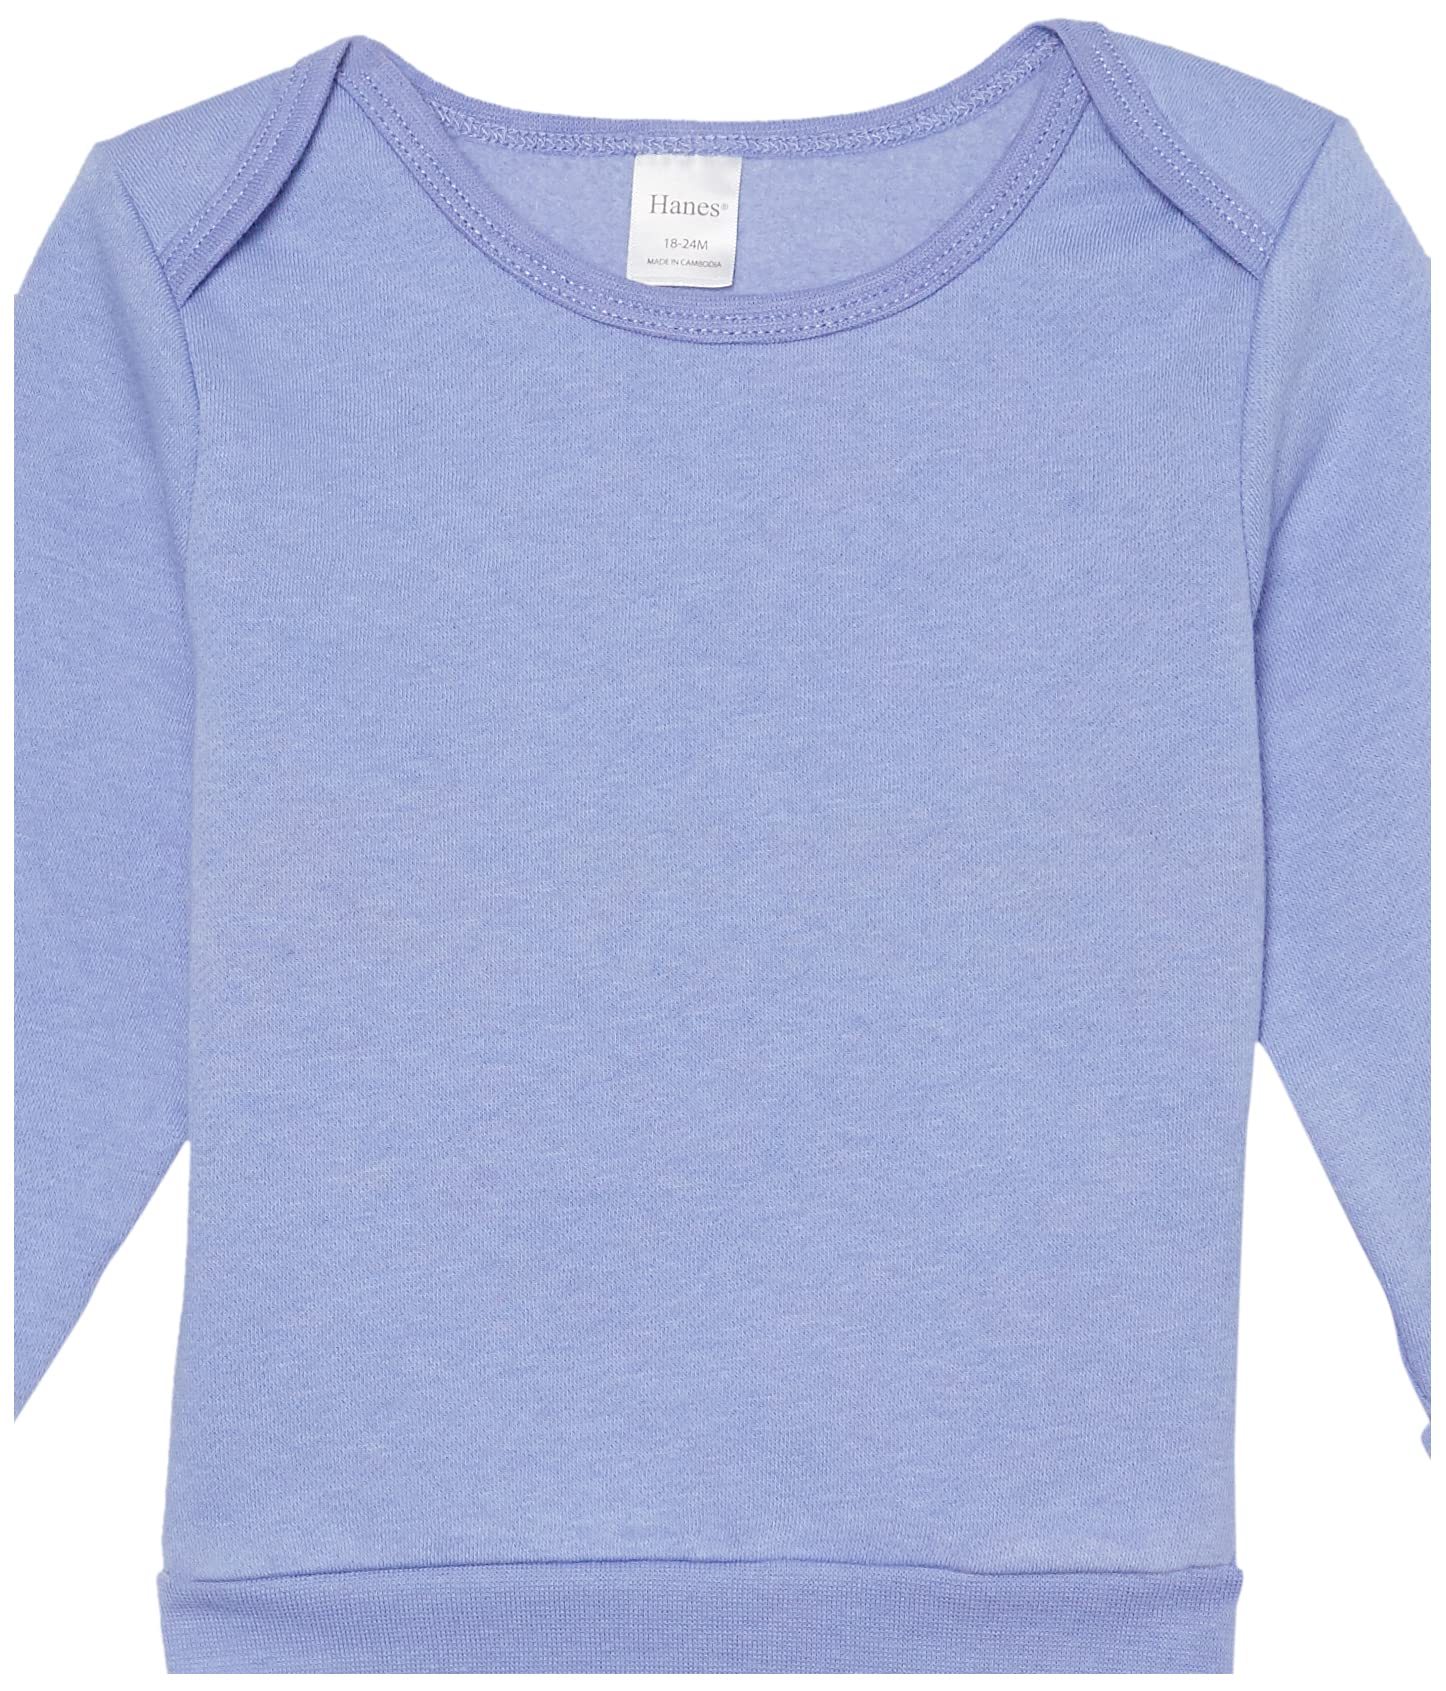 Hanes, Flexy Soft 4-way Stretch Fleece Sweatshirt, Babies and Toddlers